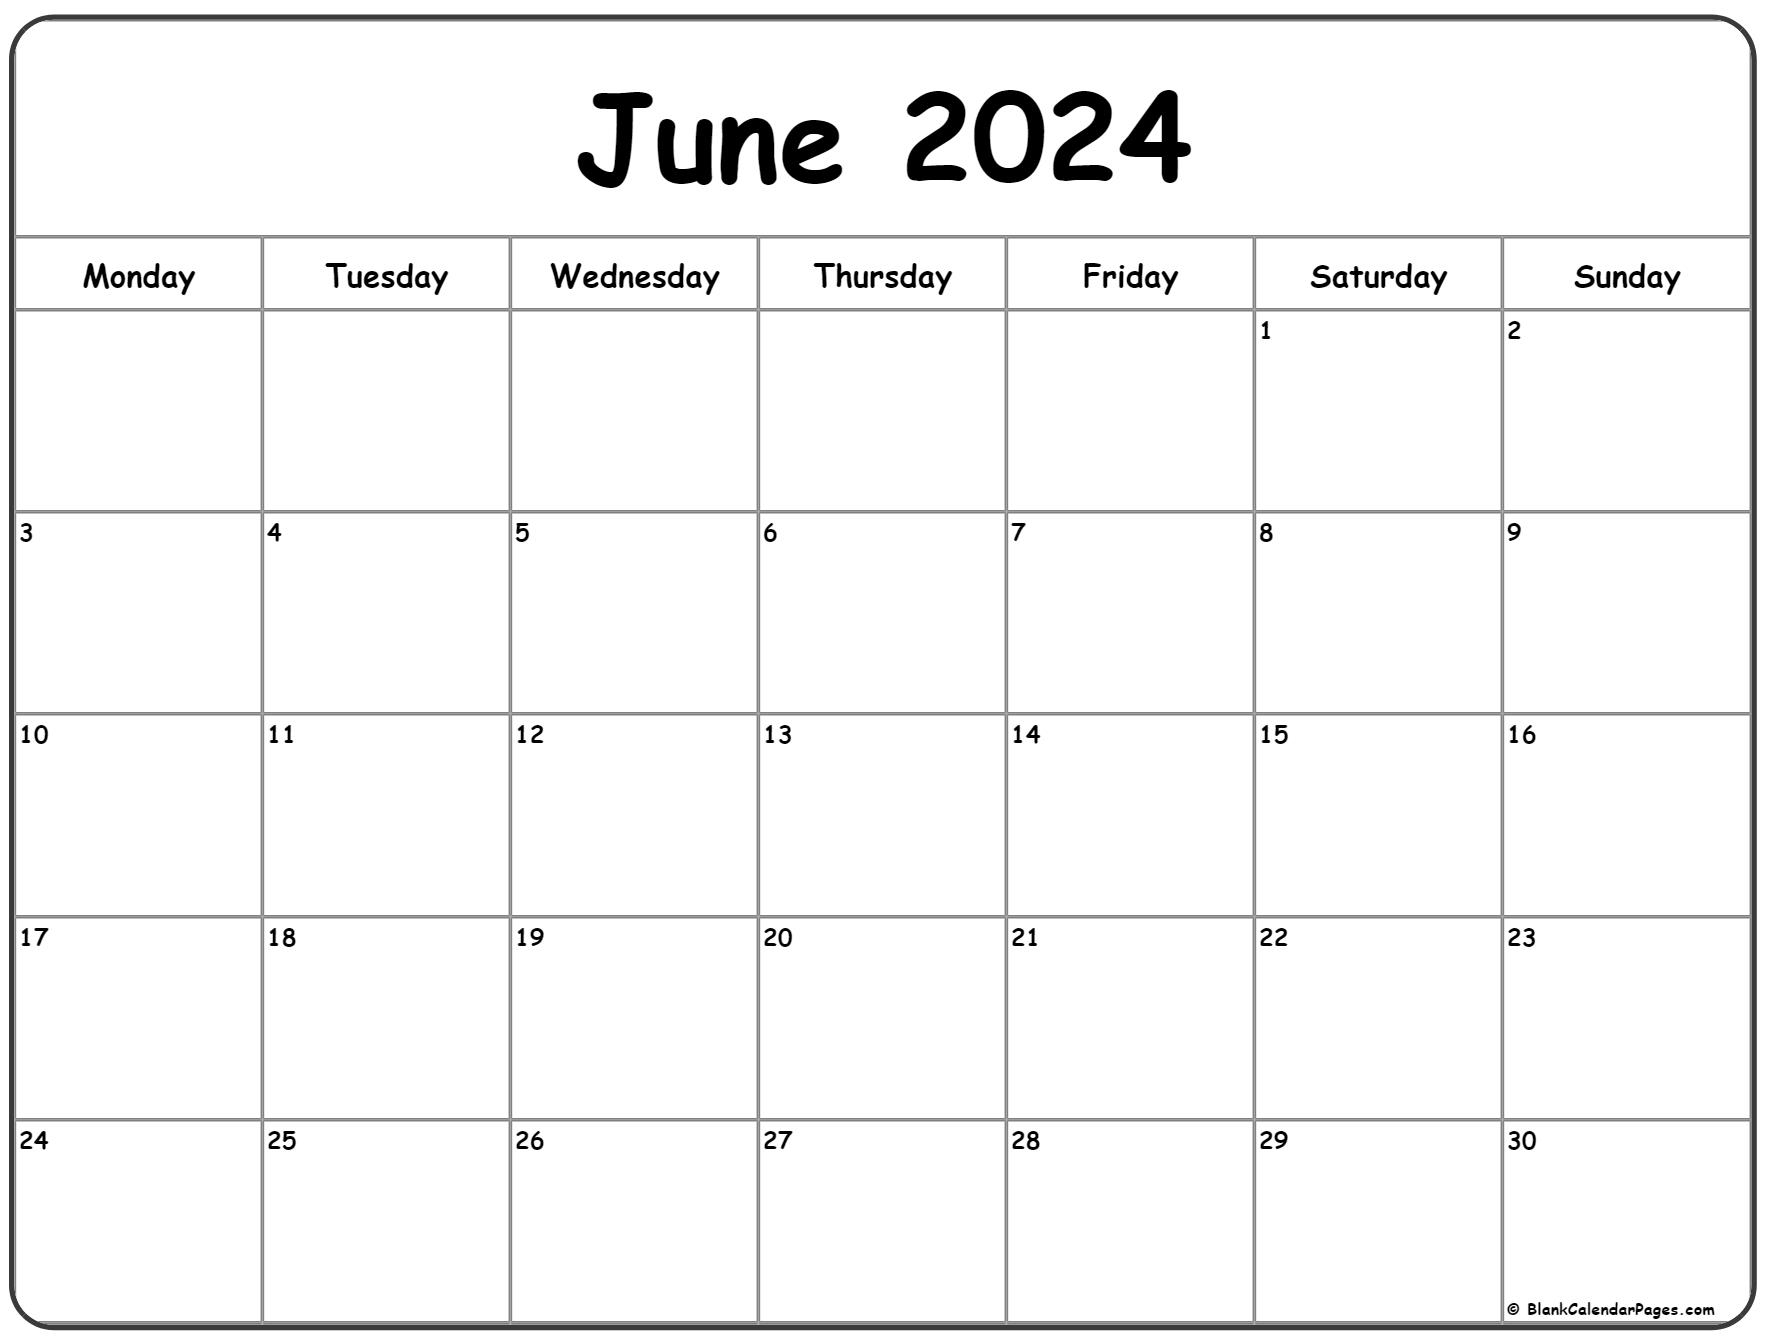 June 2022 Monday calendar. Monday to Sunday